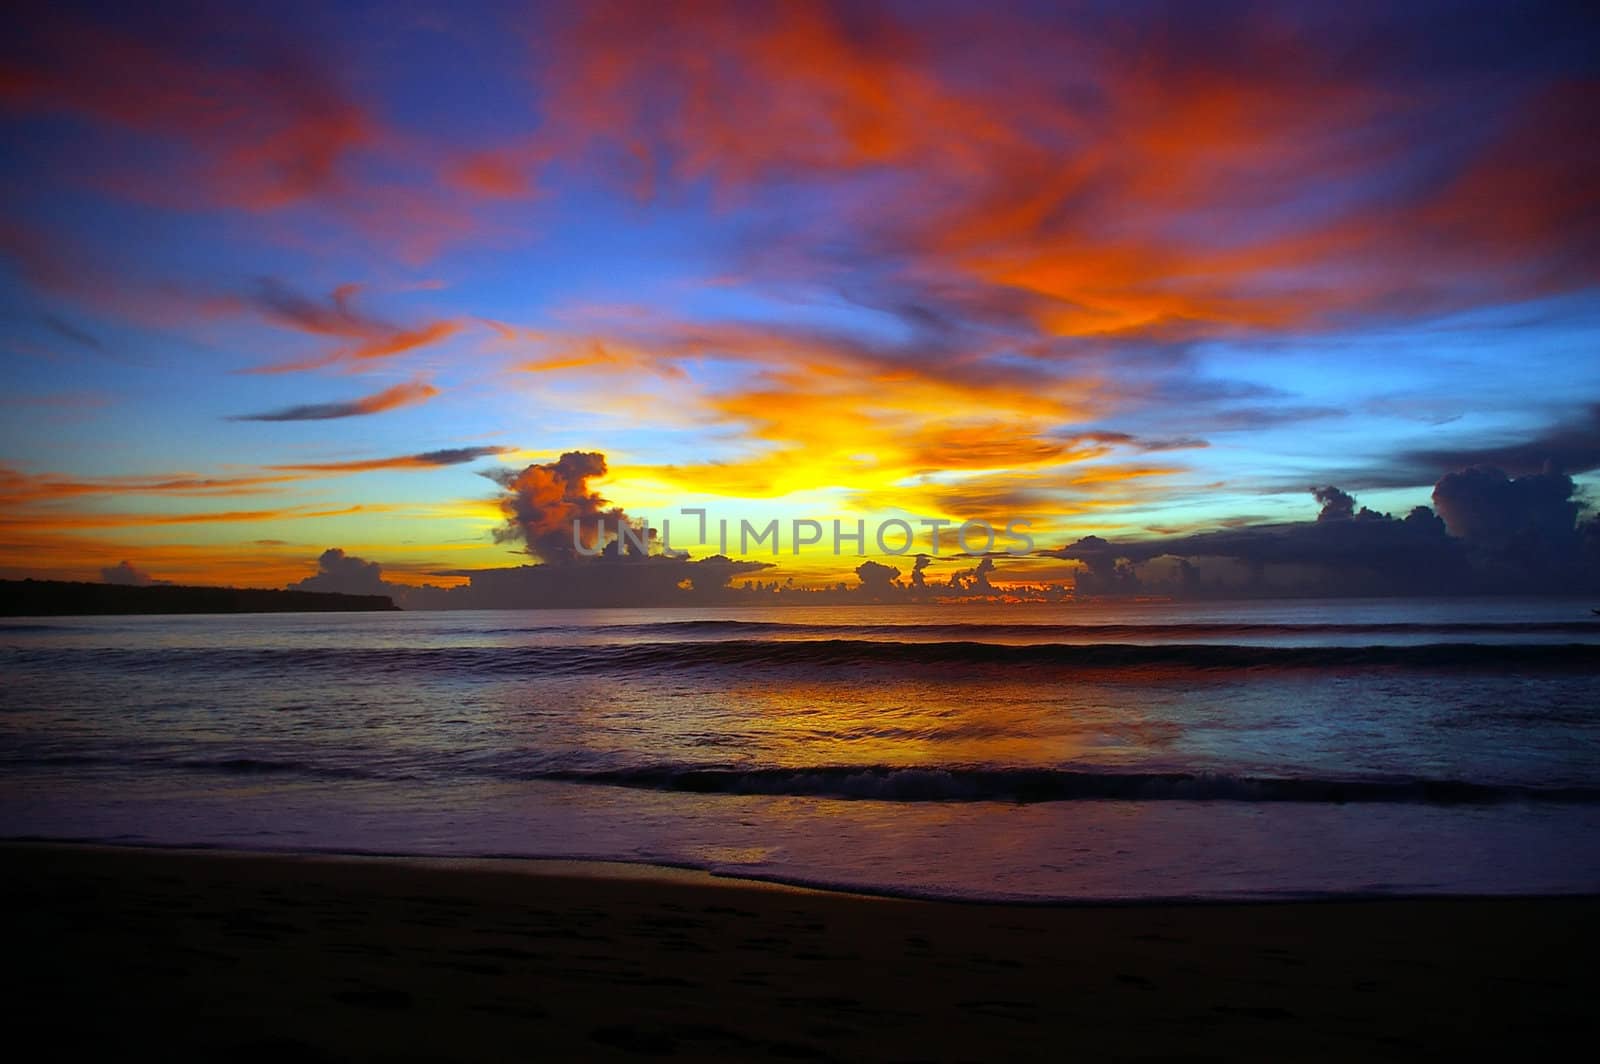 Sunset over Indian ocean, Dreamland beach, Bali, Indonesia.